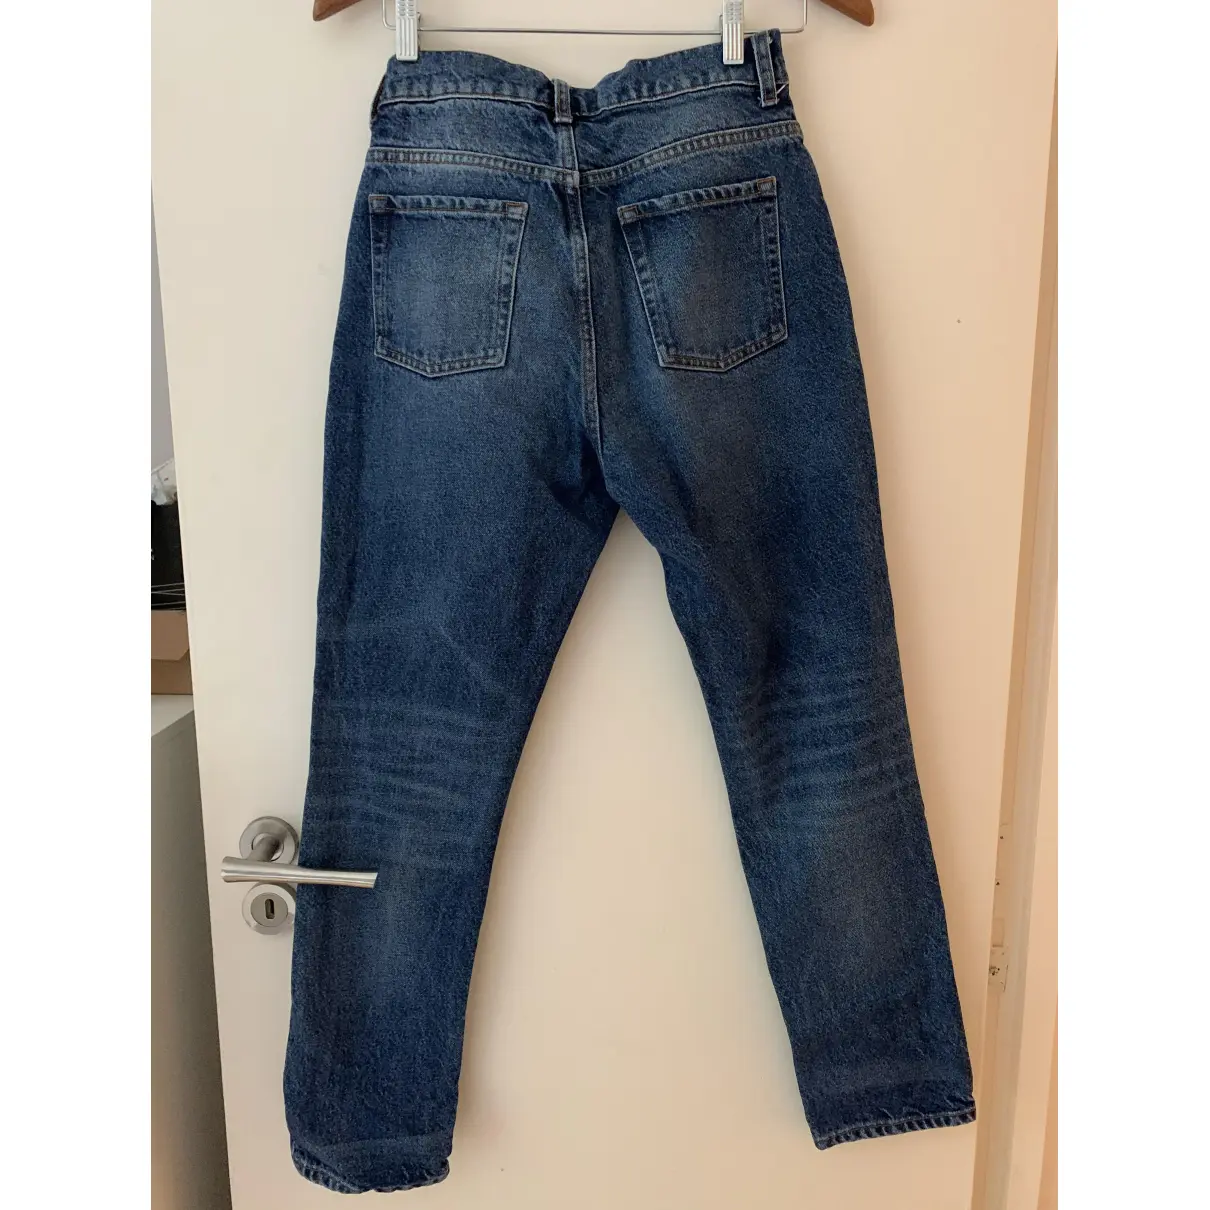 Buy Sandro Fall Winter 2019 straight jeans online